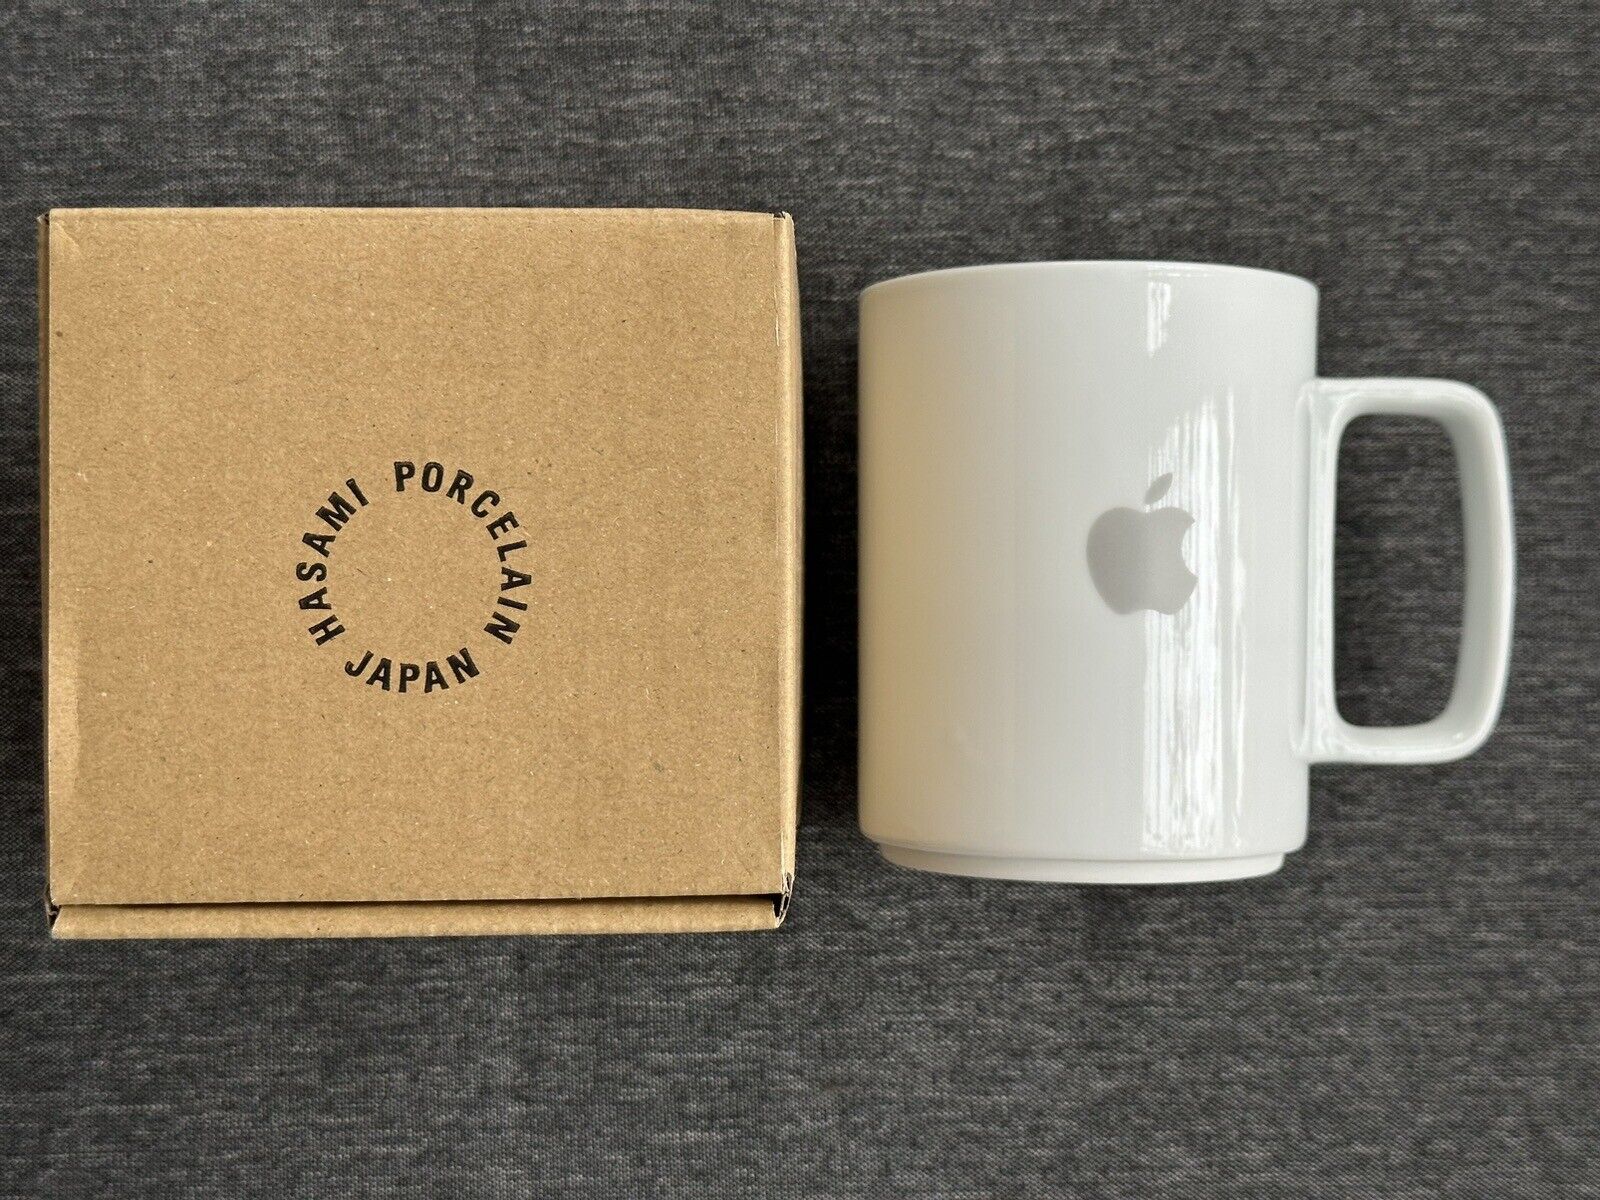 Apple Infinite Loop - Mug by Hasami Porcelain Japan - White - Large - NEW